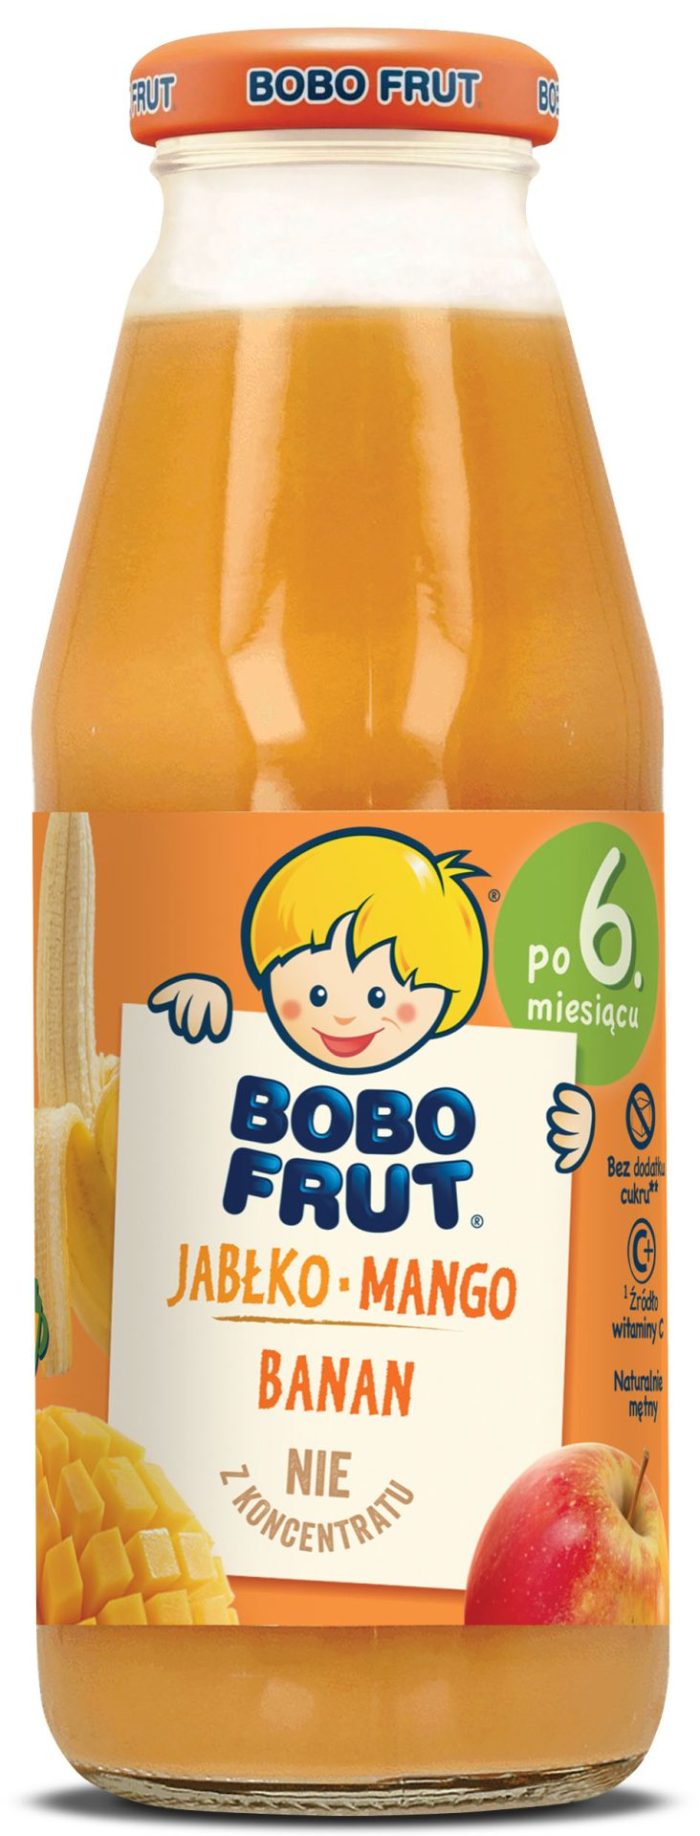 BOBO FRUT Nektar jabłko mango banan, 300ml